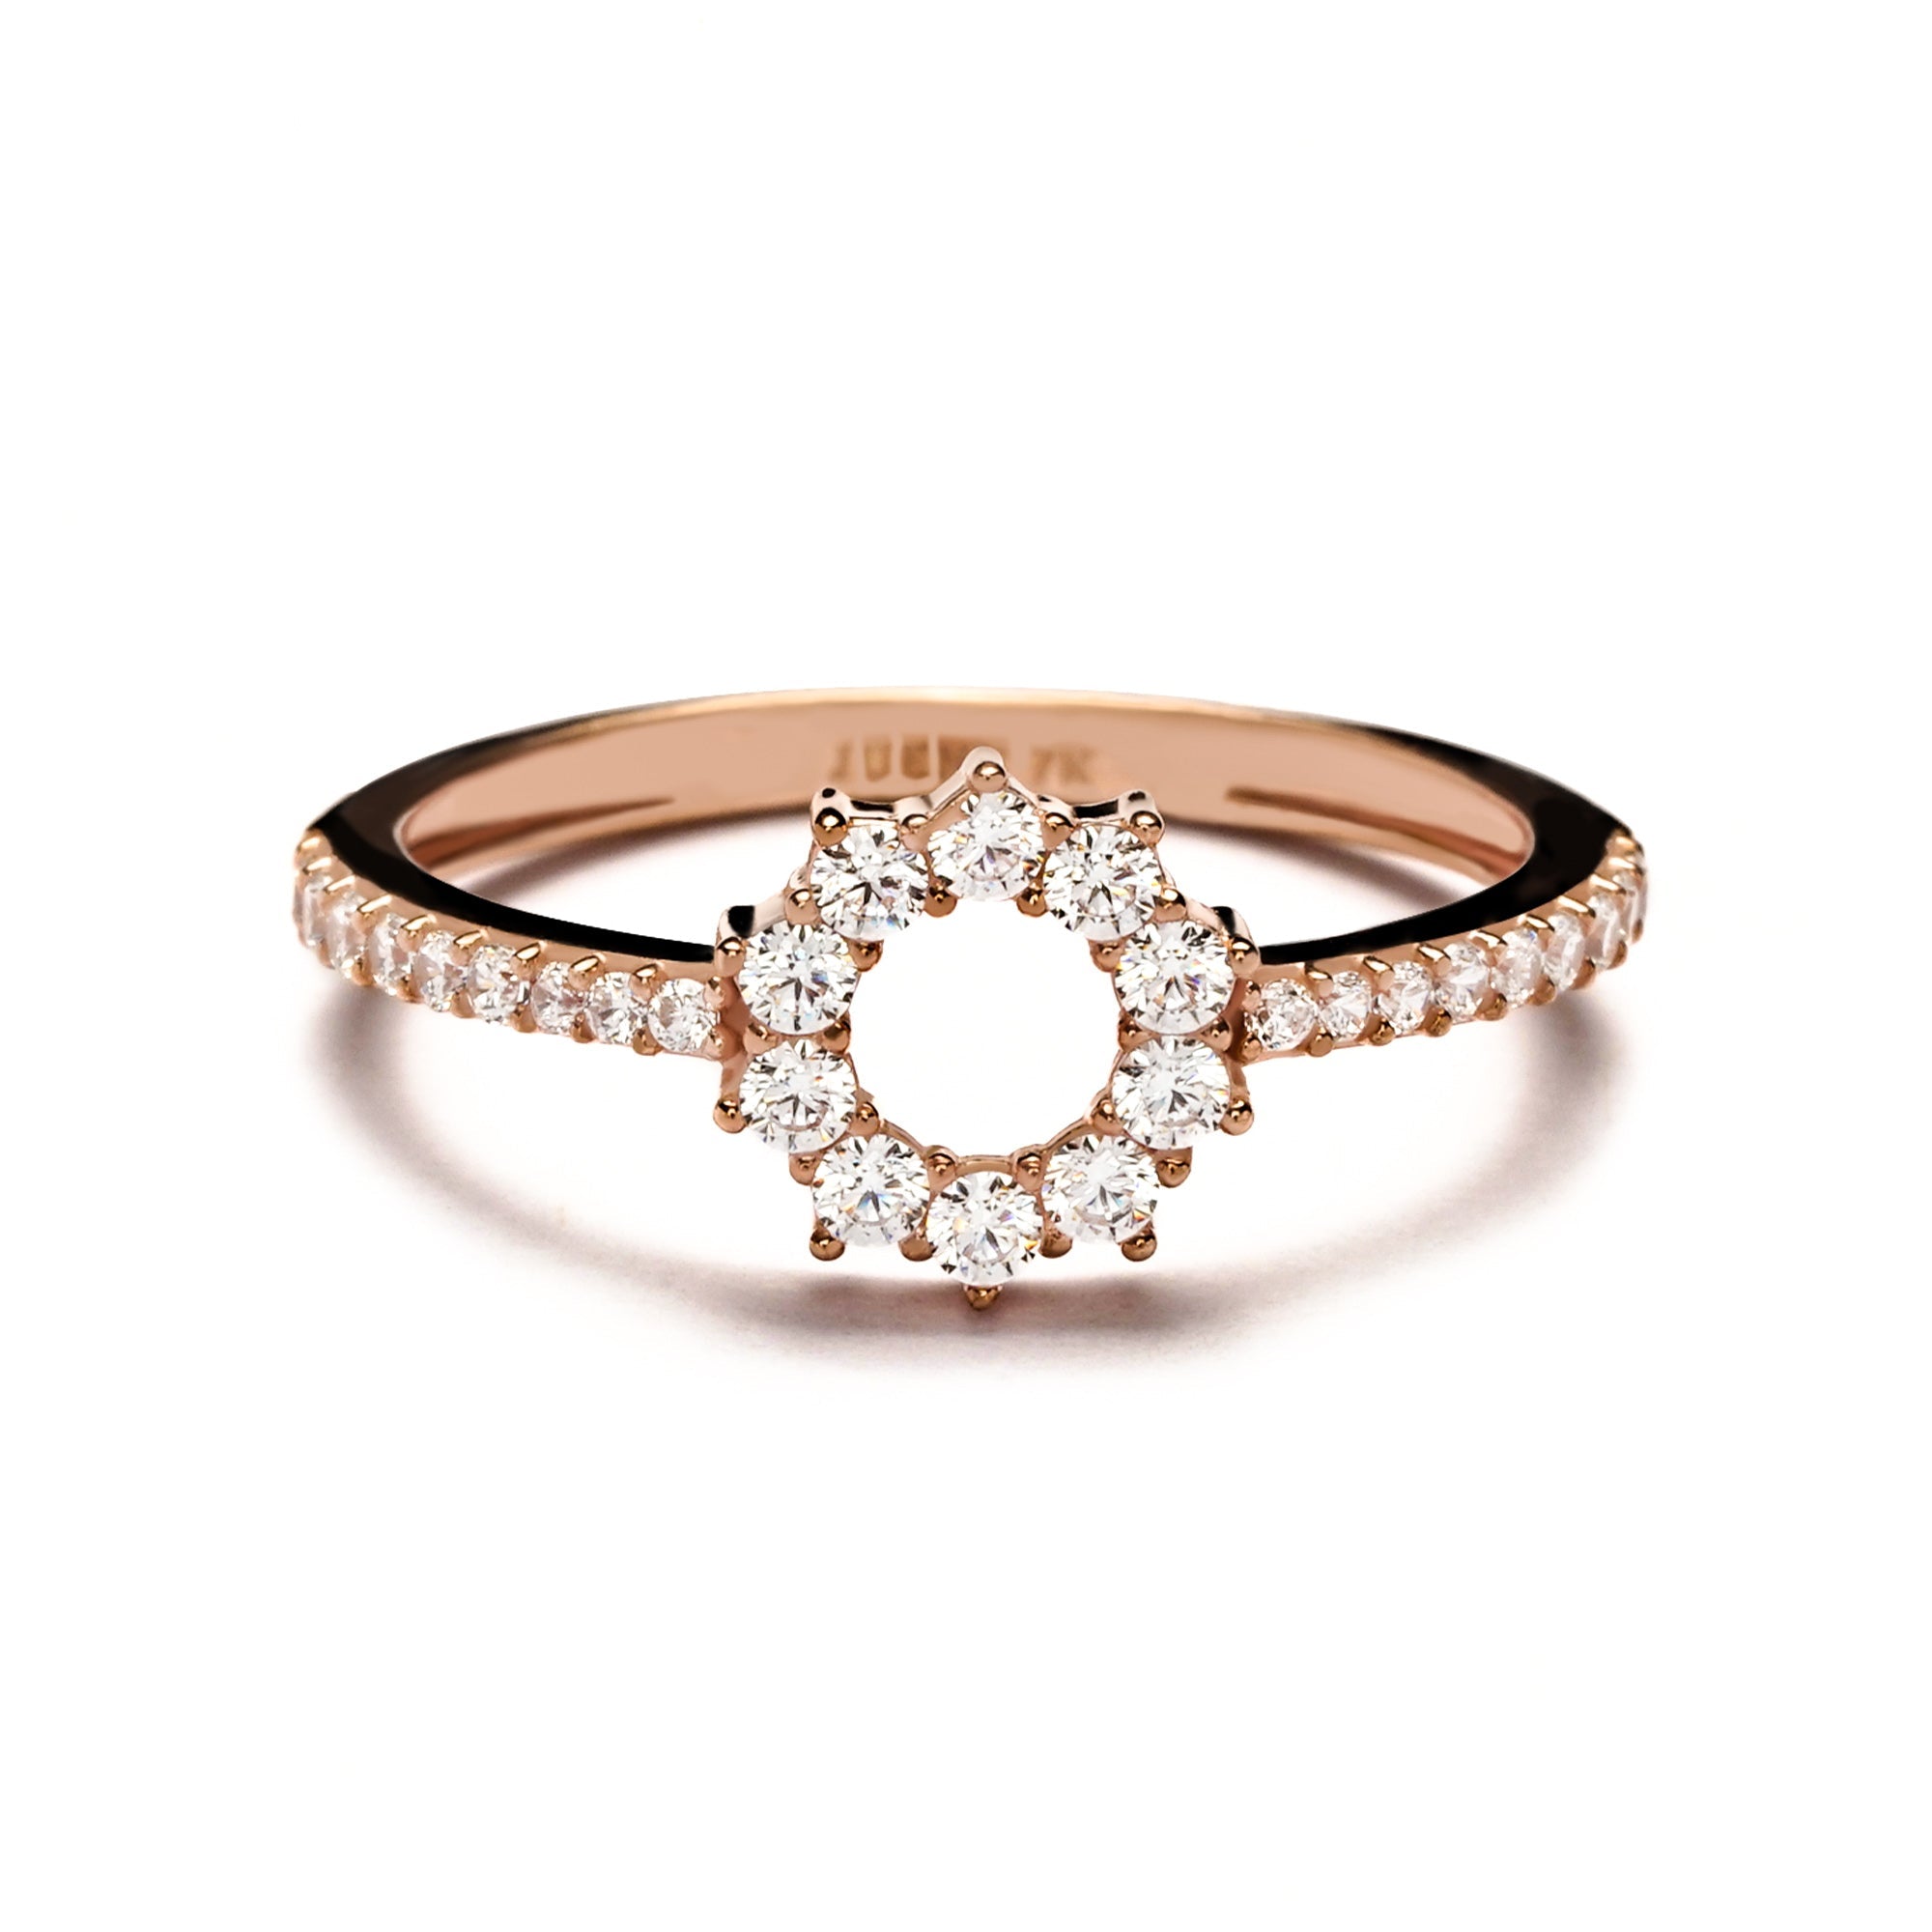 Emilia Gold Ring - Radiance - Juene Jewelry